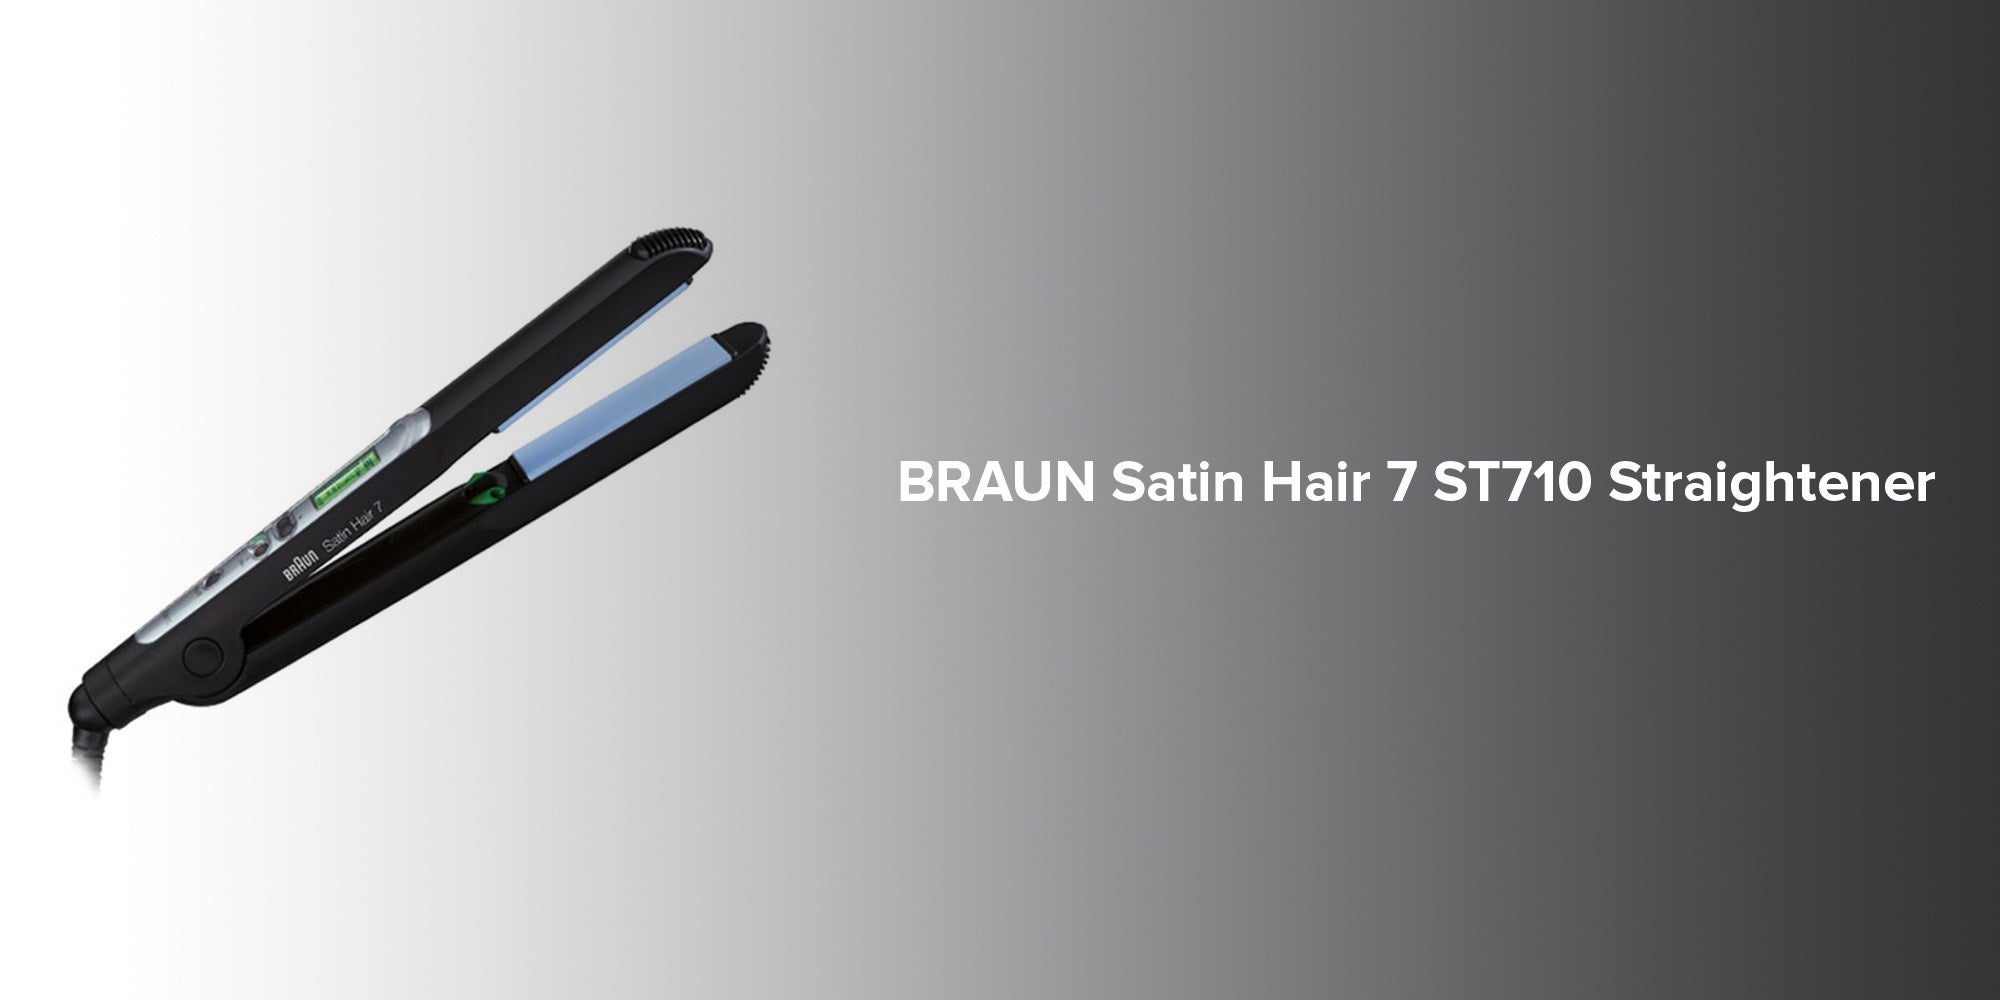 Braun Satin Hair 7 Hair Straightener, Black and Silver, 170 Watts, ST710 -  UPC: 4210201099598